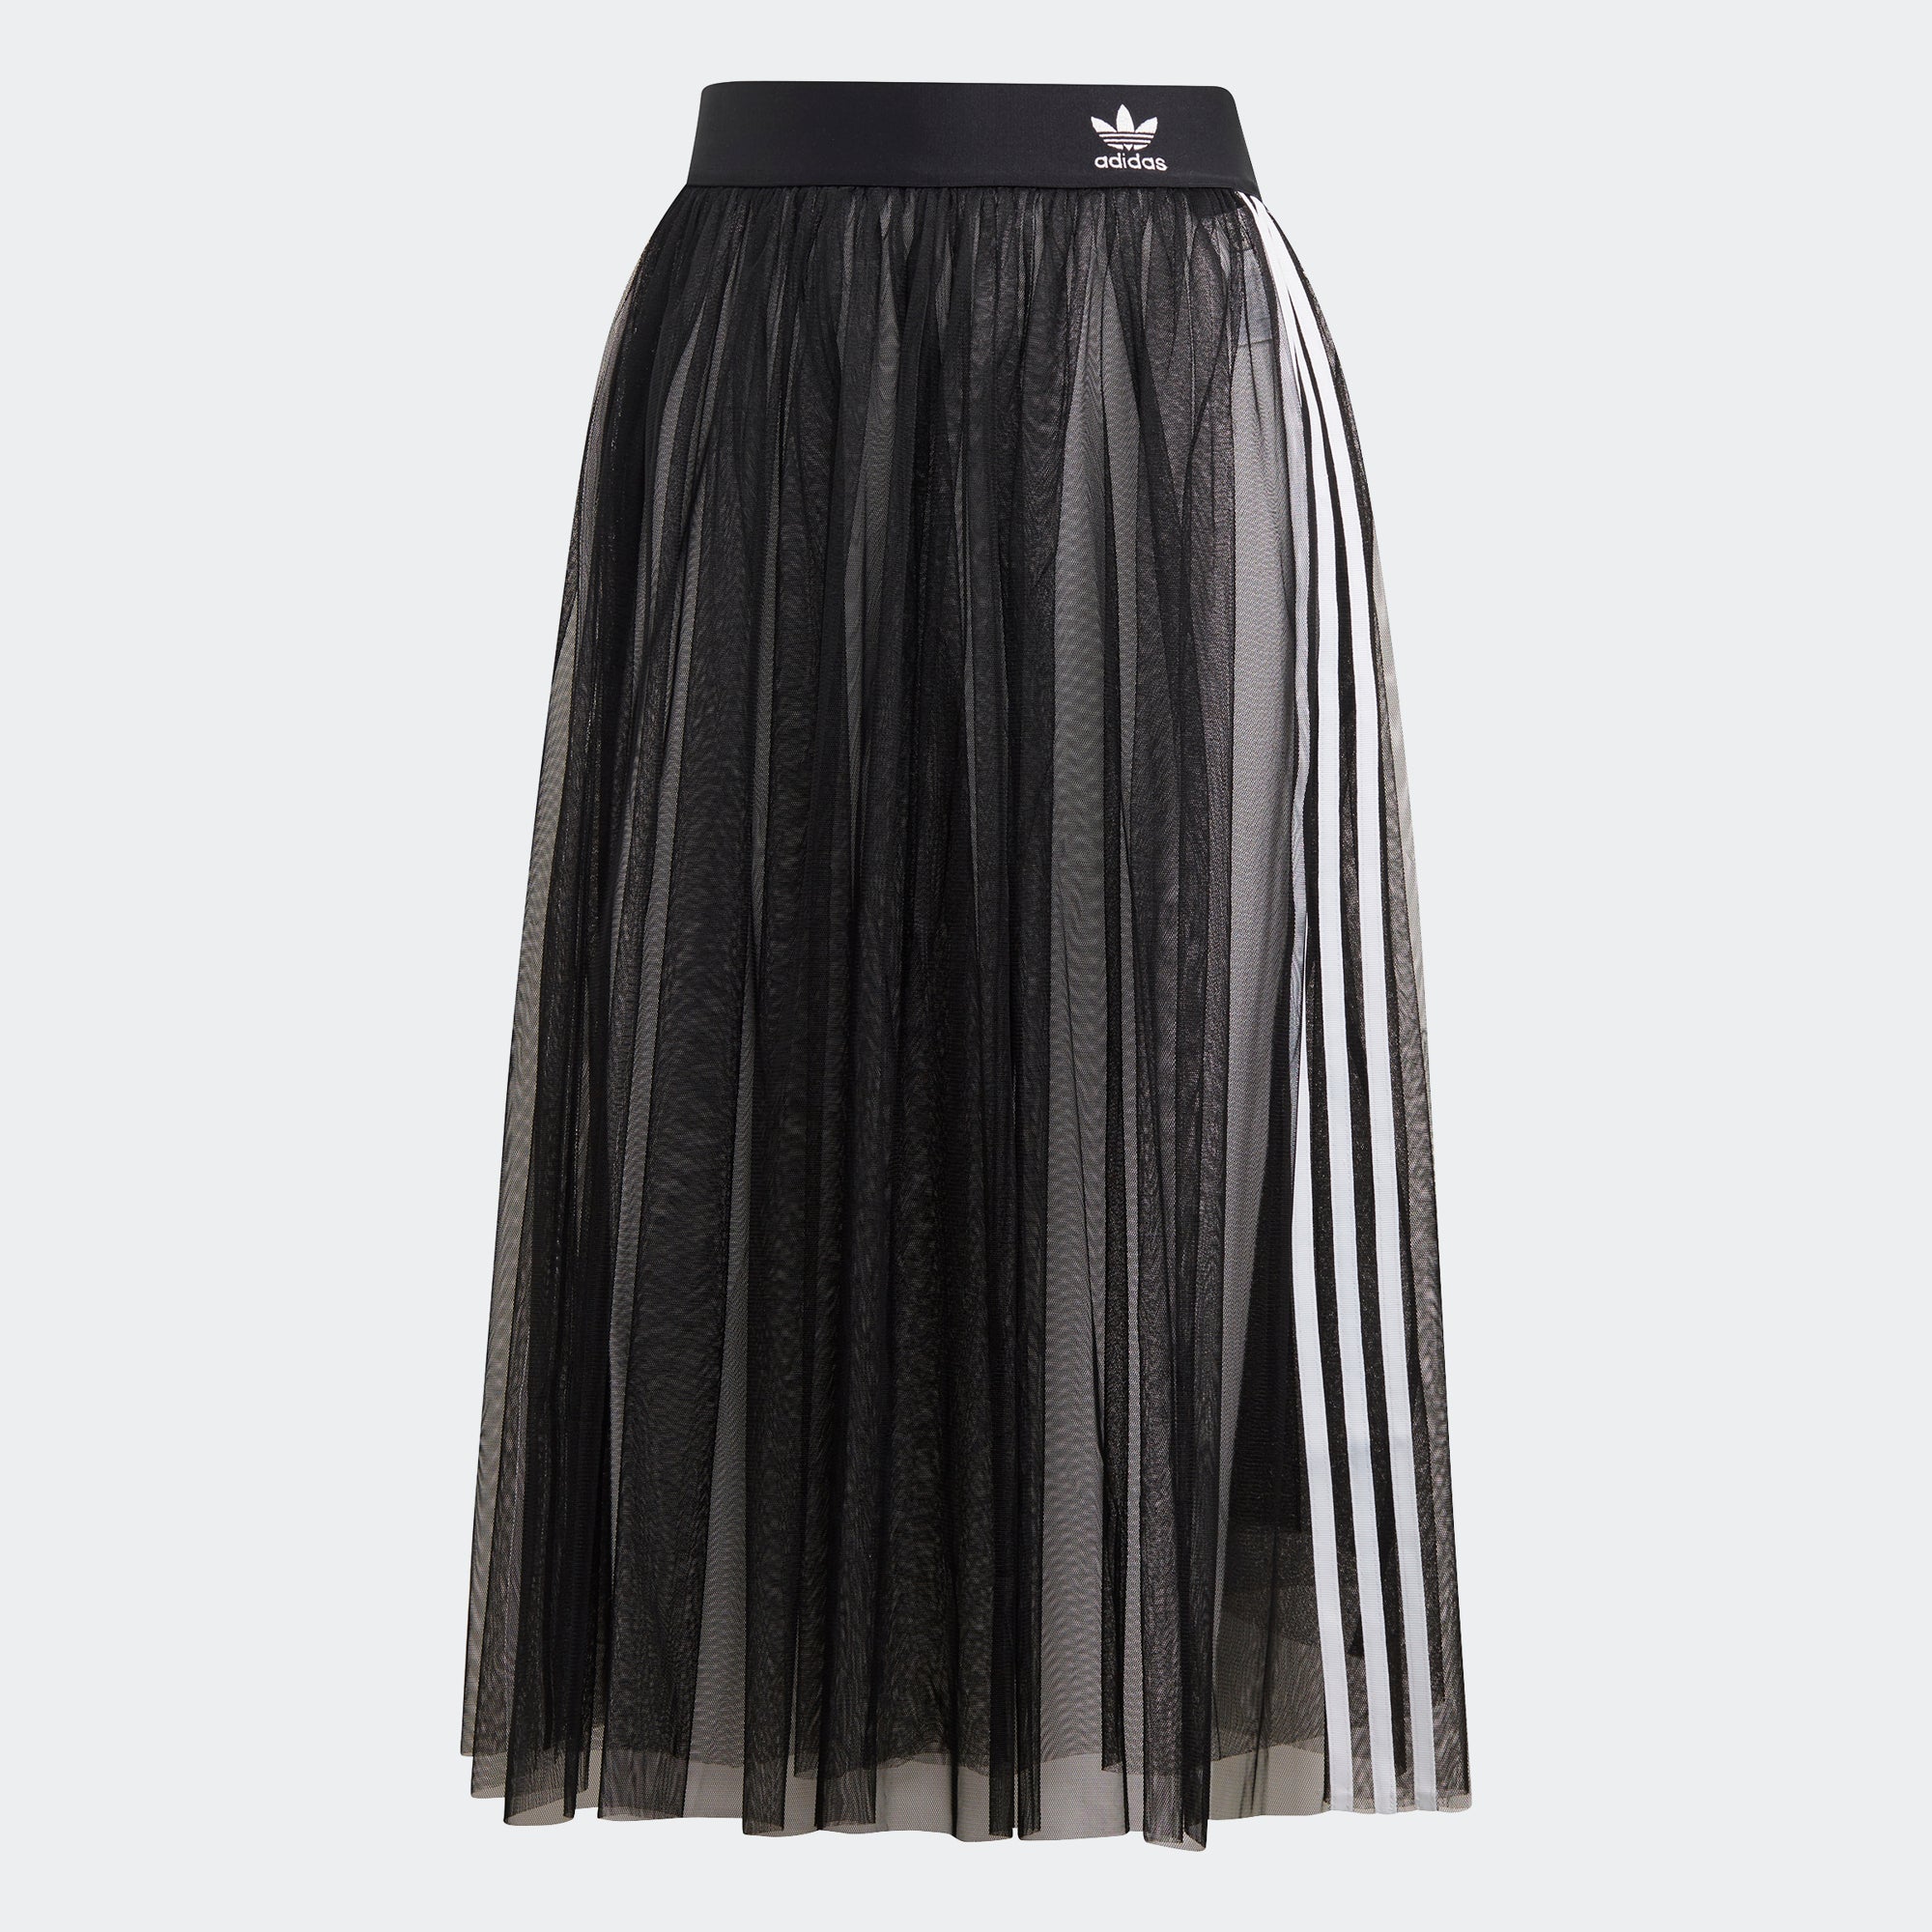 adidas Tulle Skirt Black DX3696 